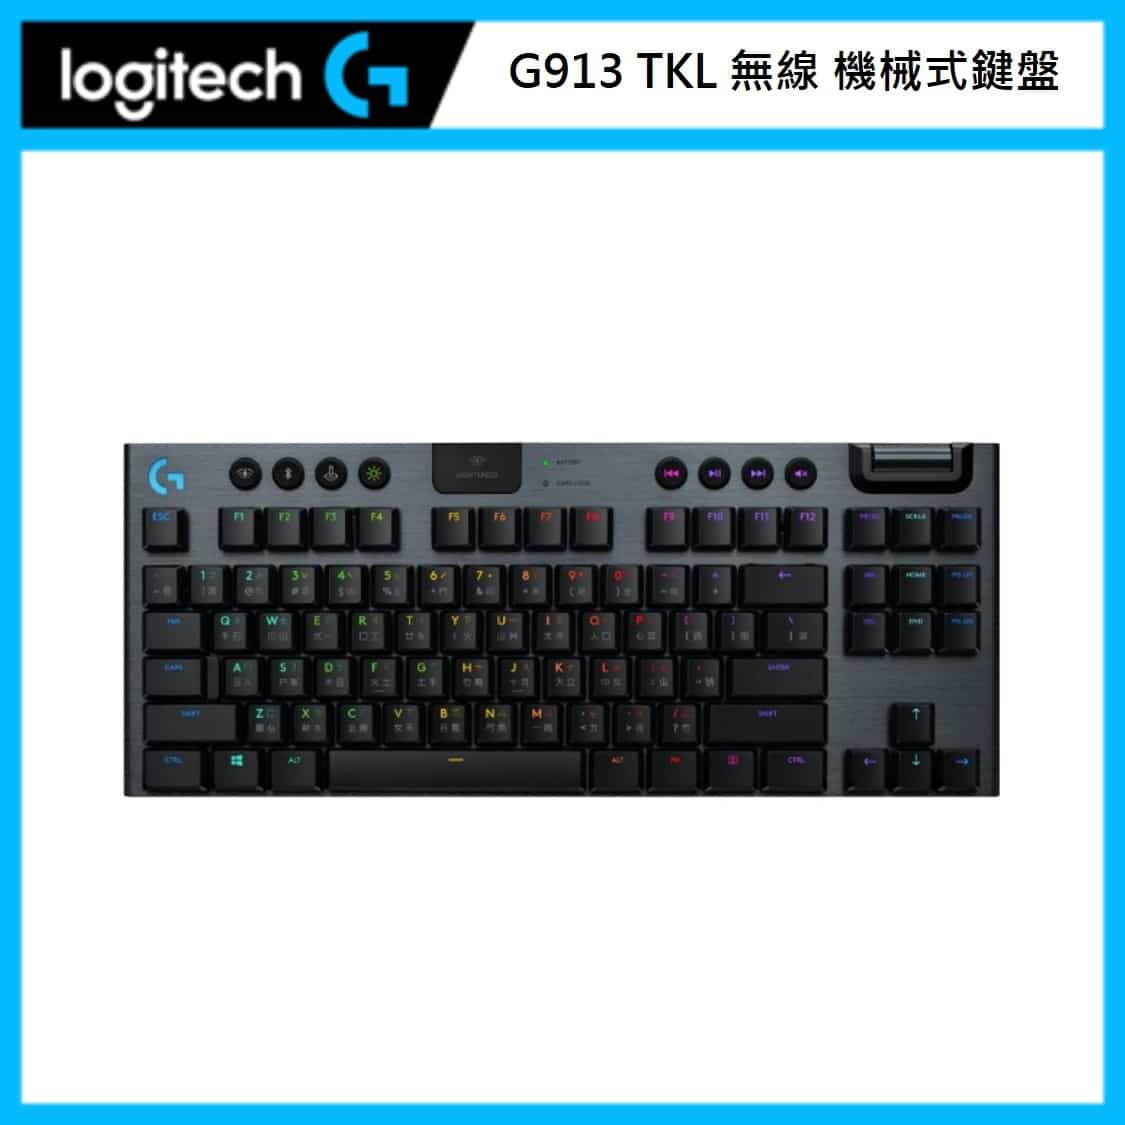 Logitech G 羅技 G913 TKL 無線80%機械式電競鍵盤 (茶軸/紅軸)